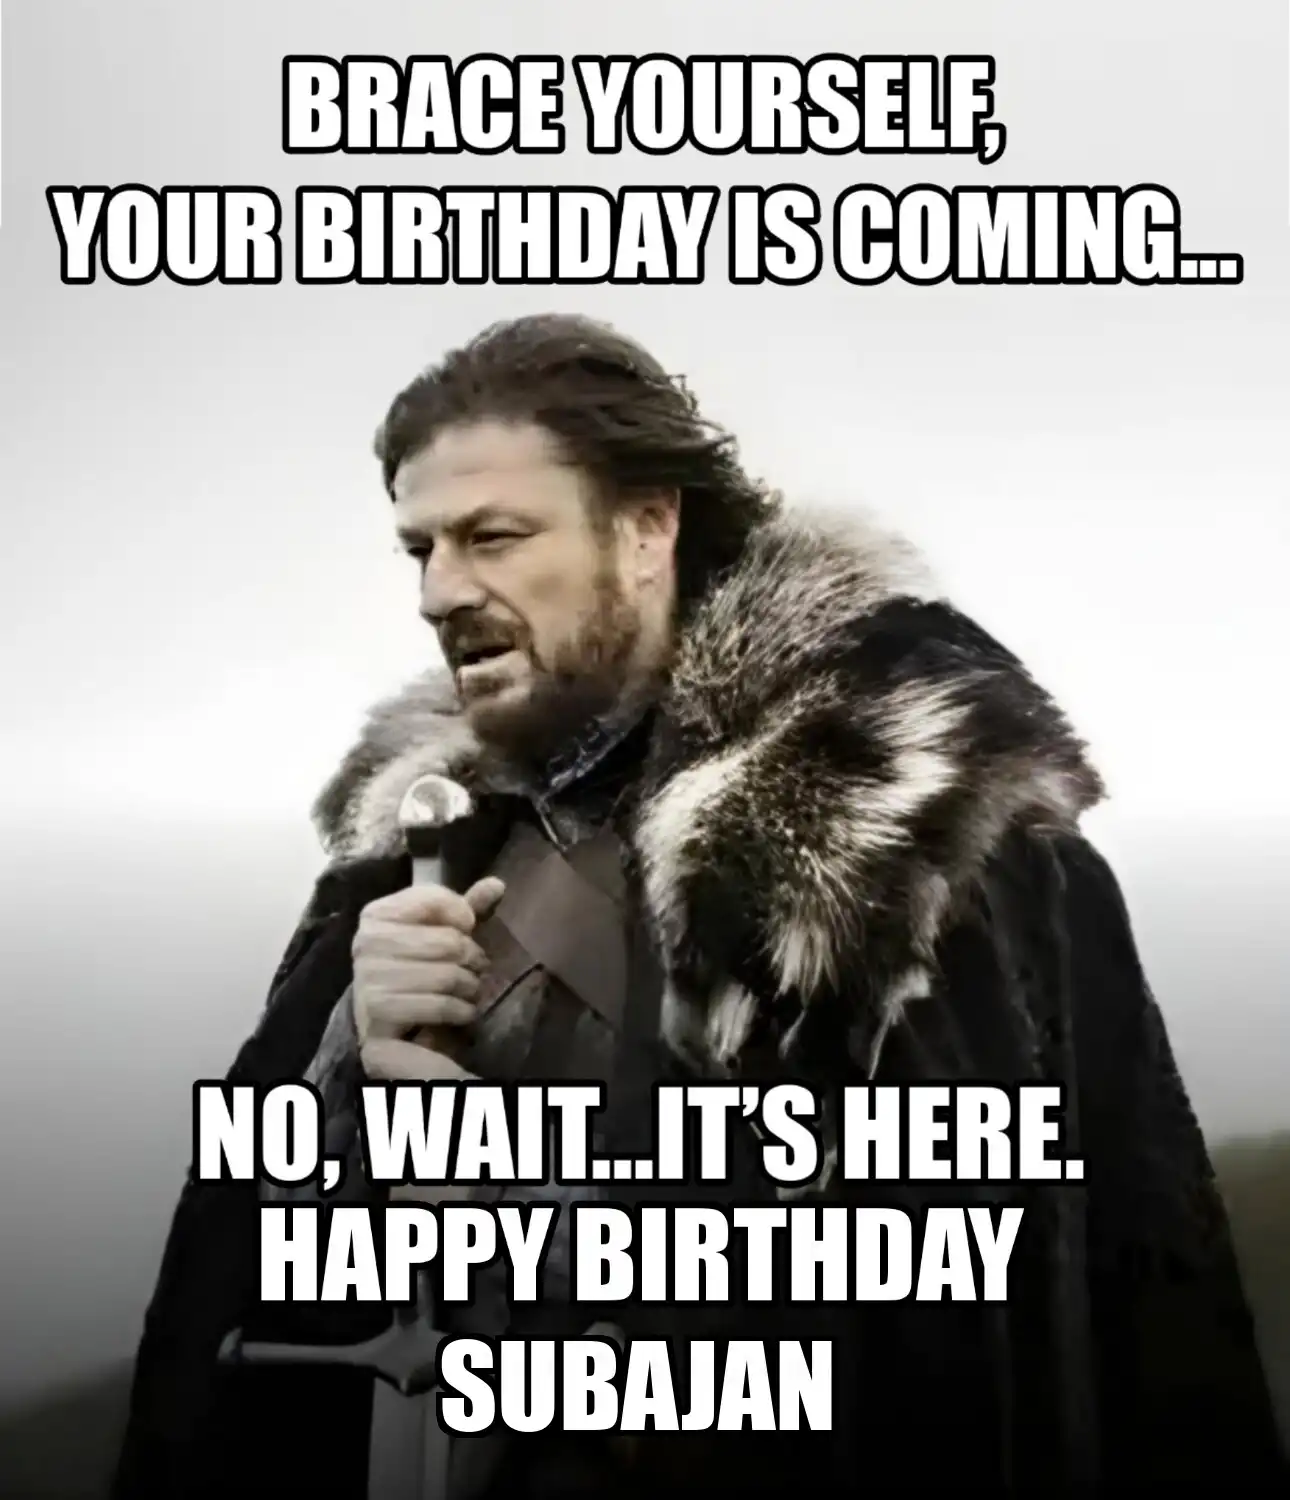 Happy Birthday Subajan Brace Yourself Your Birthday Is Coming Meme